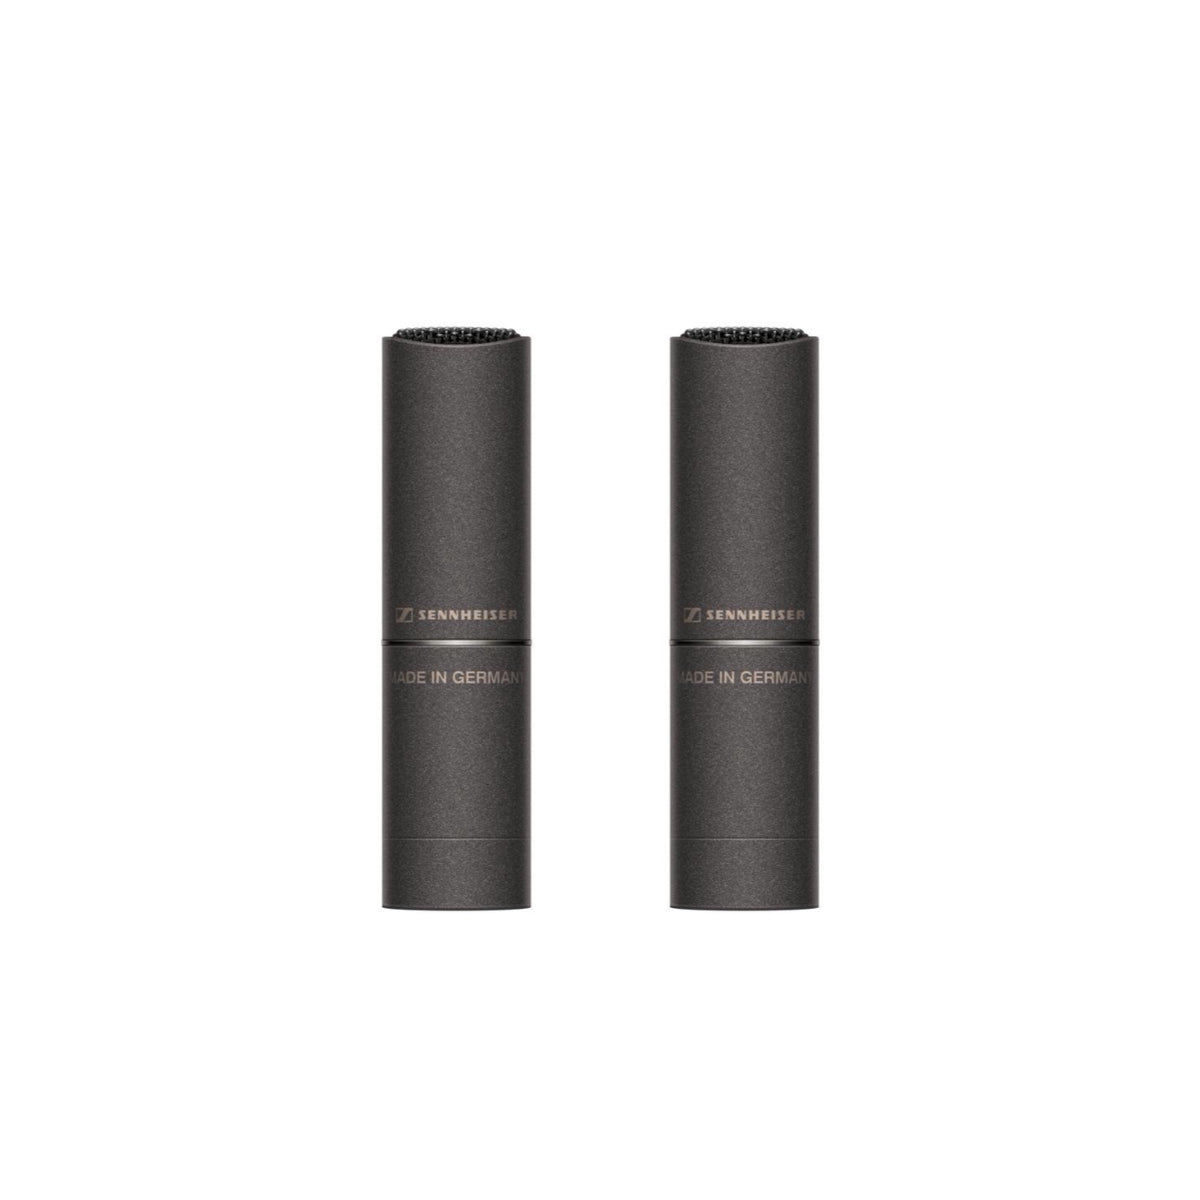 Sennheiser MKH 8020 Stereoset Redesign 2x Condenser Omni-directional Microphone, 2 XLR Module, Black